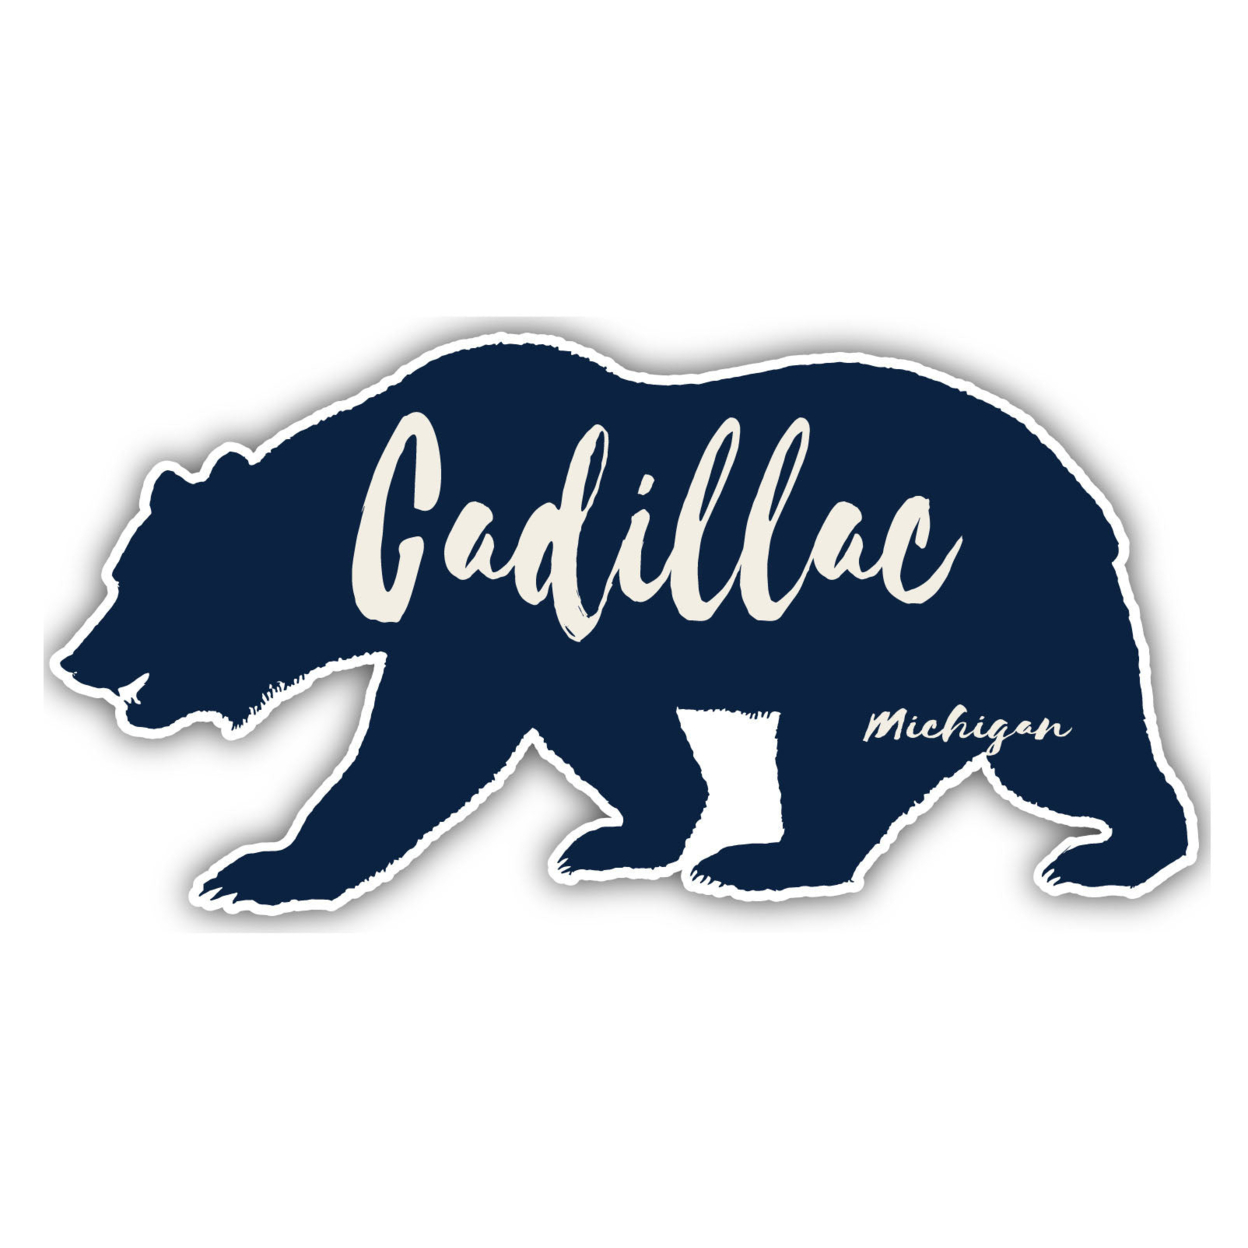 Cadillac Michigan Souvenir Decorative Stickers (Choose Theme And Size) - Single Unit, 6-Inch, Bear